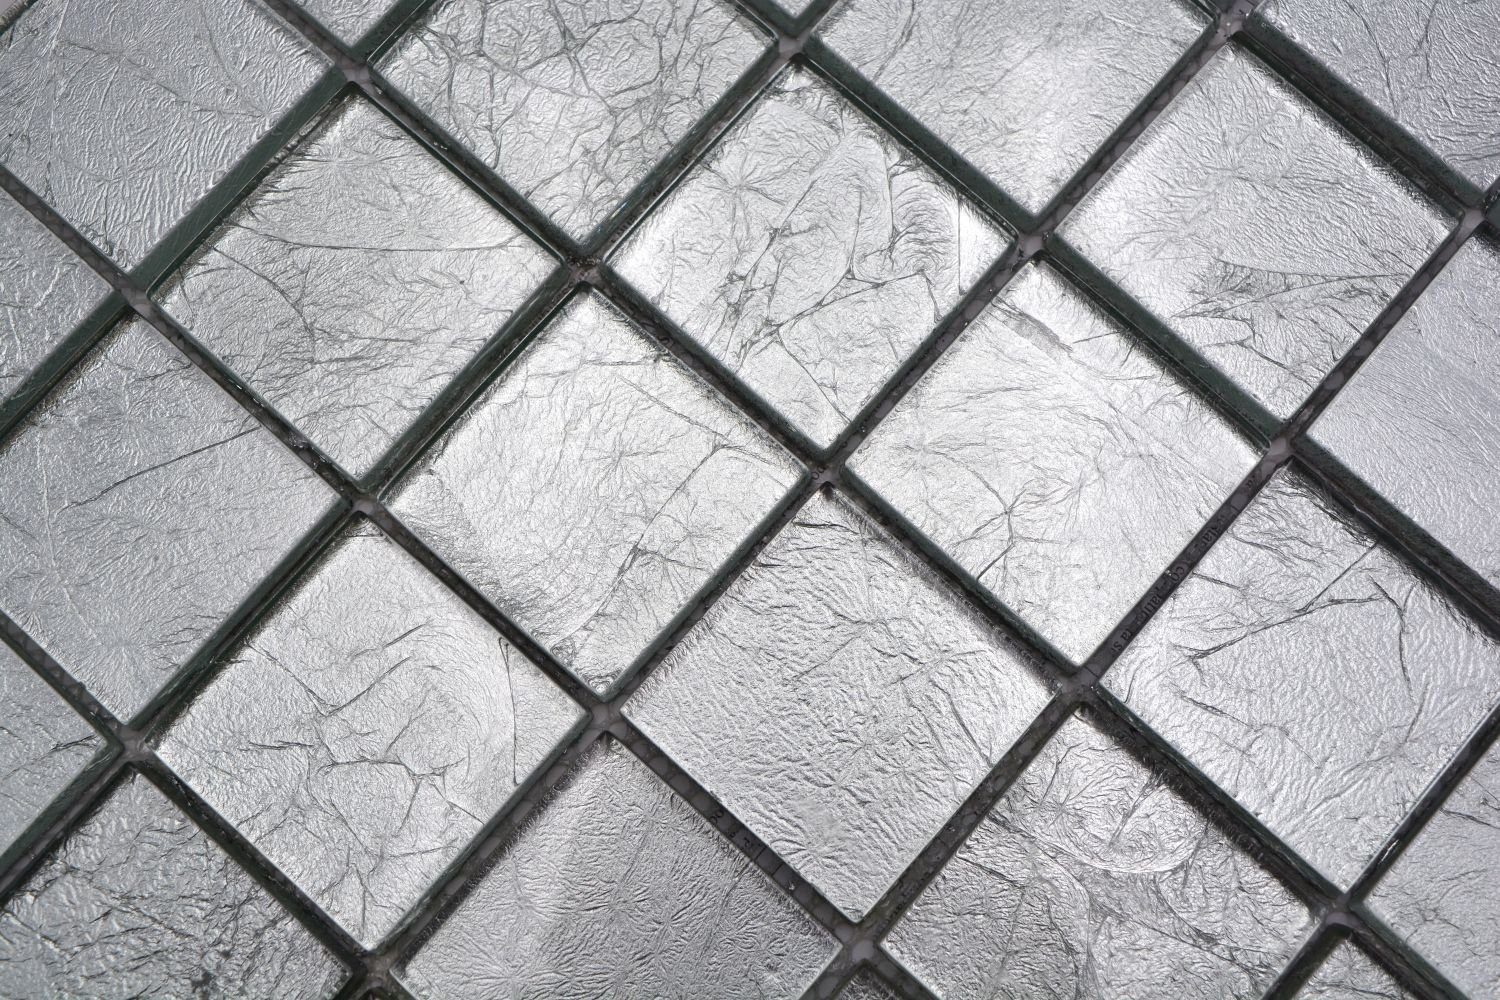 Crystal 10 Matten silber Mosani Mosaikfliesen Glasmosaik Mosaikfliesen / glänzend